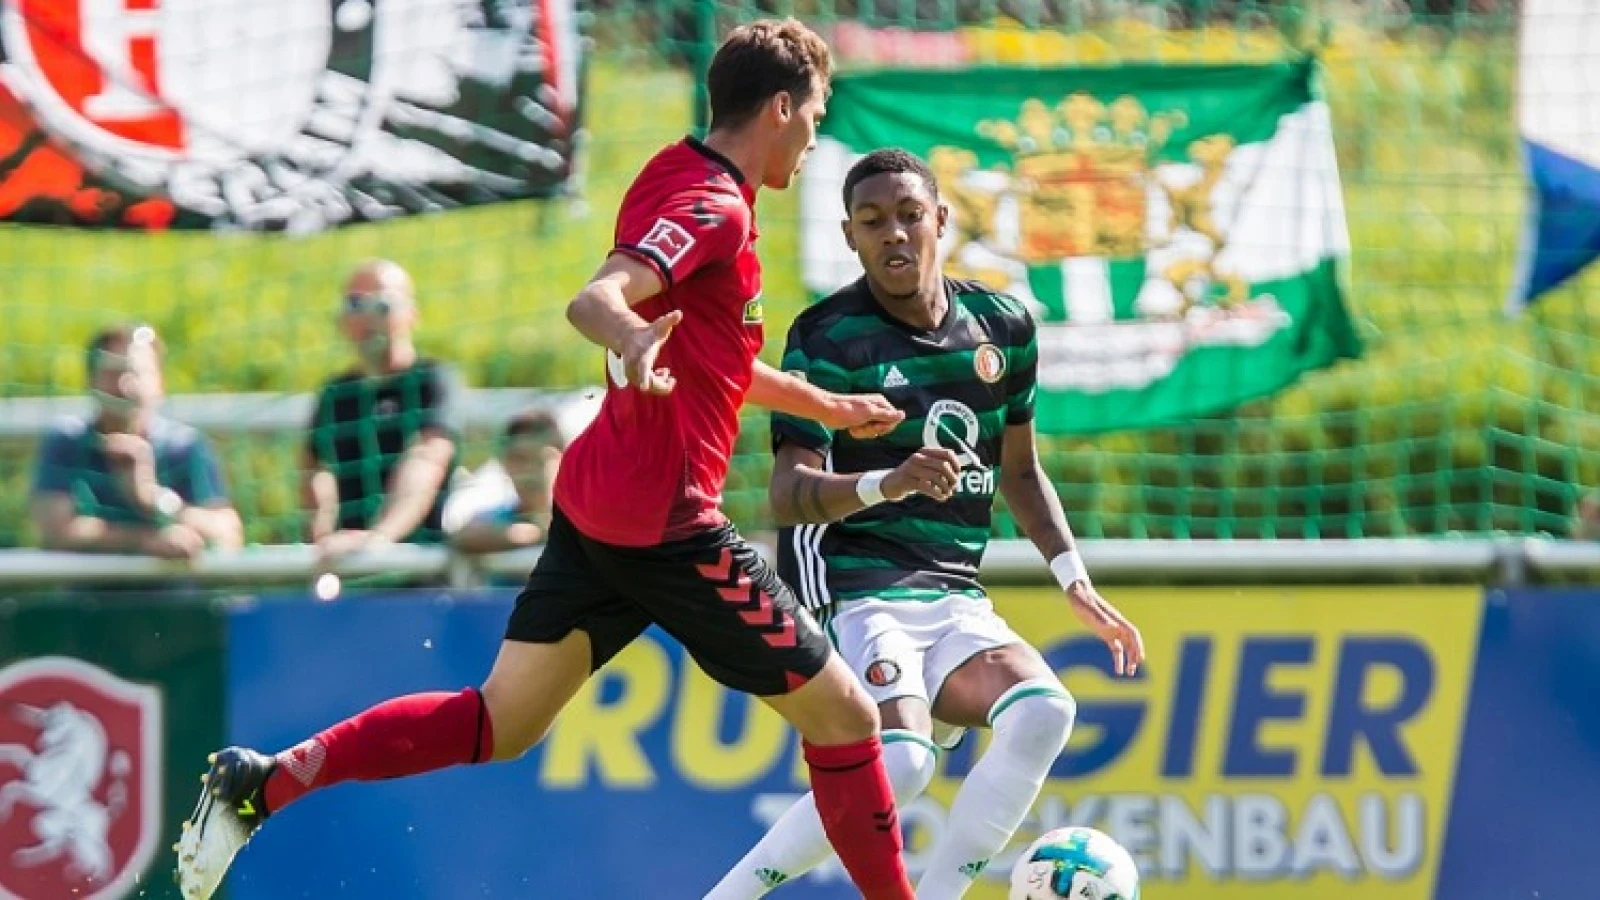 LIVE verslag | SC Freiburg - Feyenoord 1-0 | Einde wedstrijd